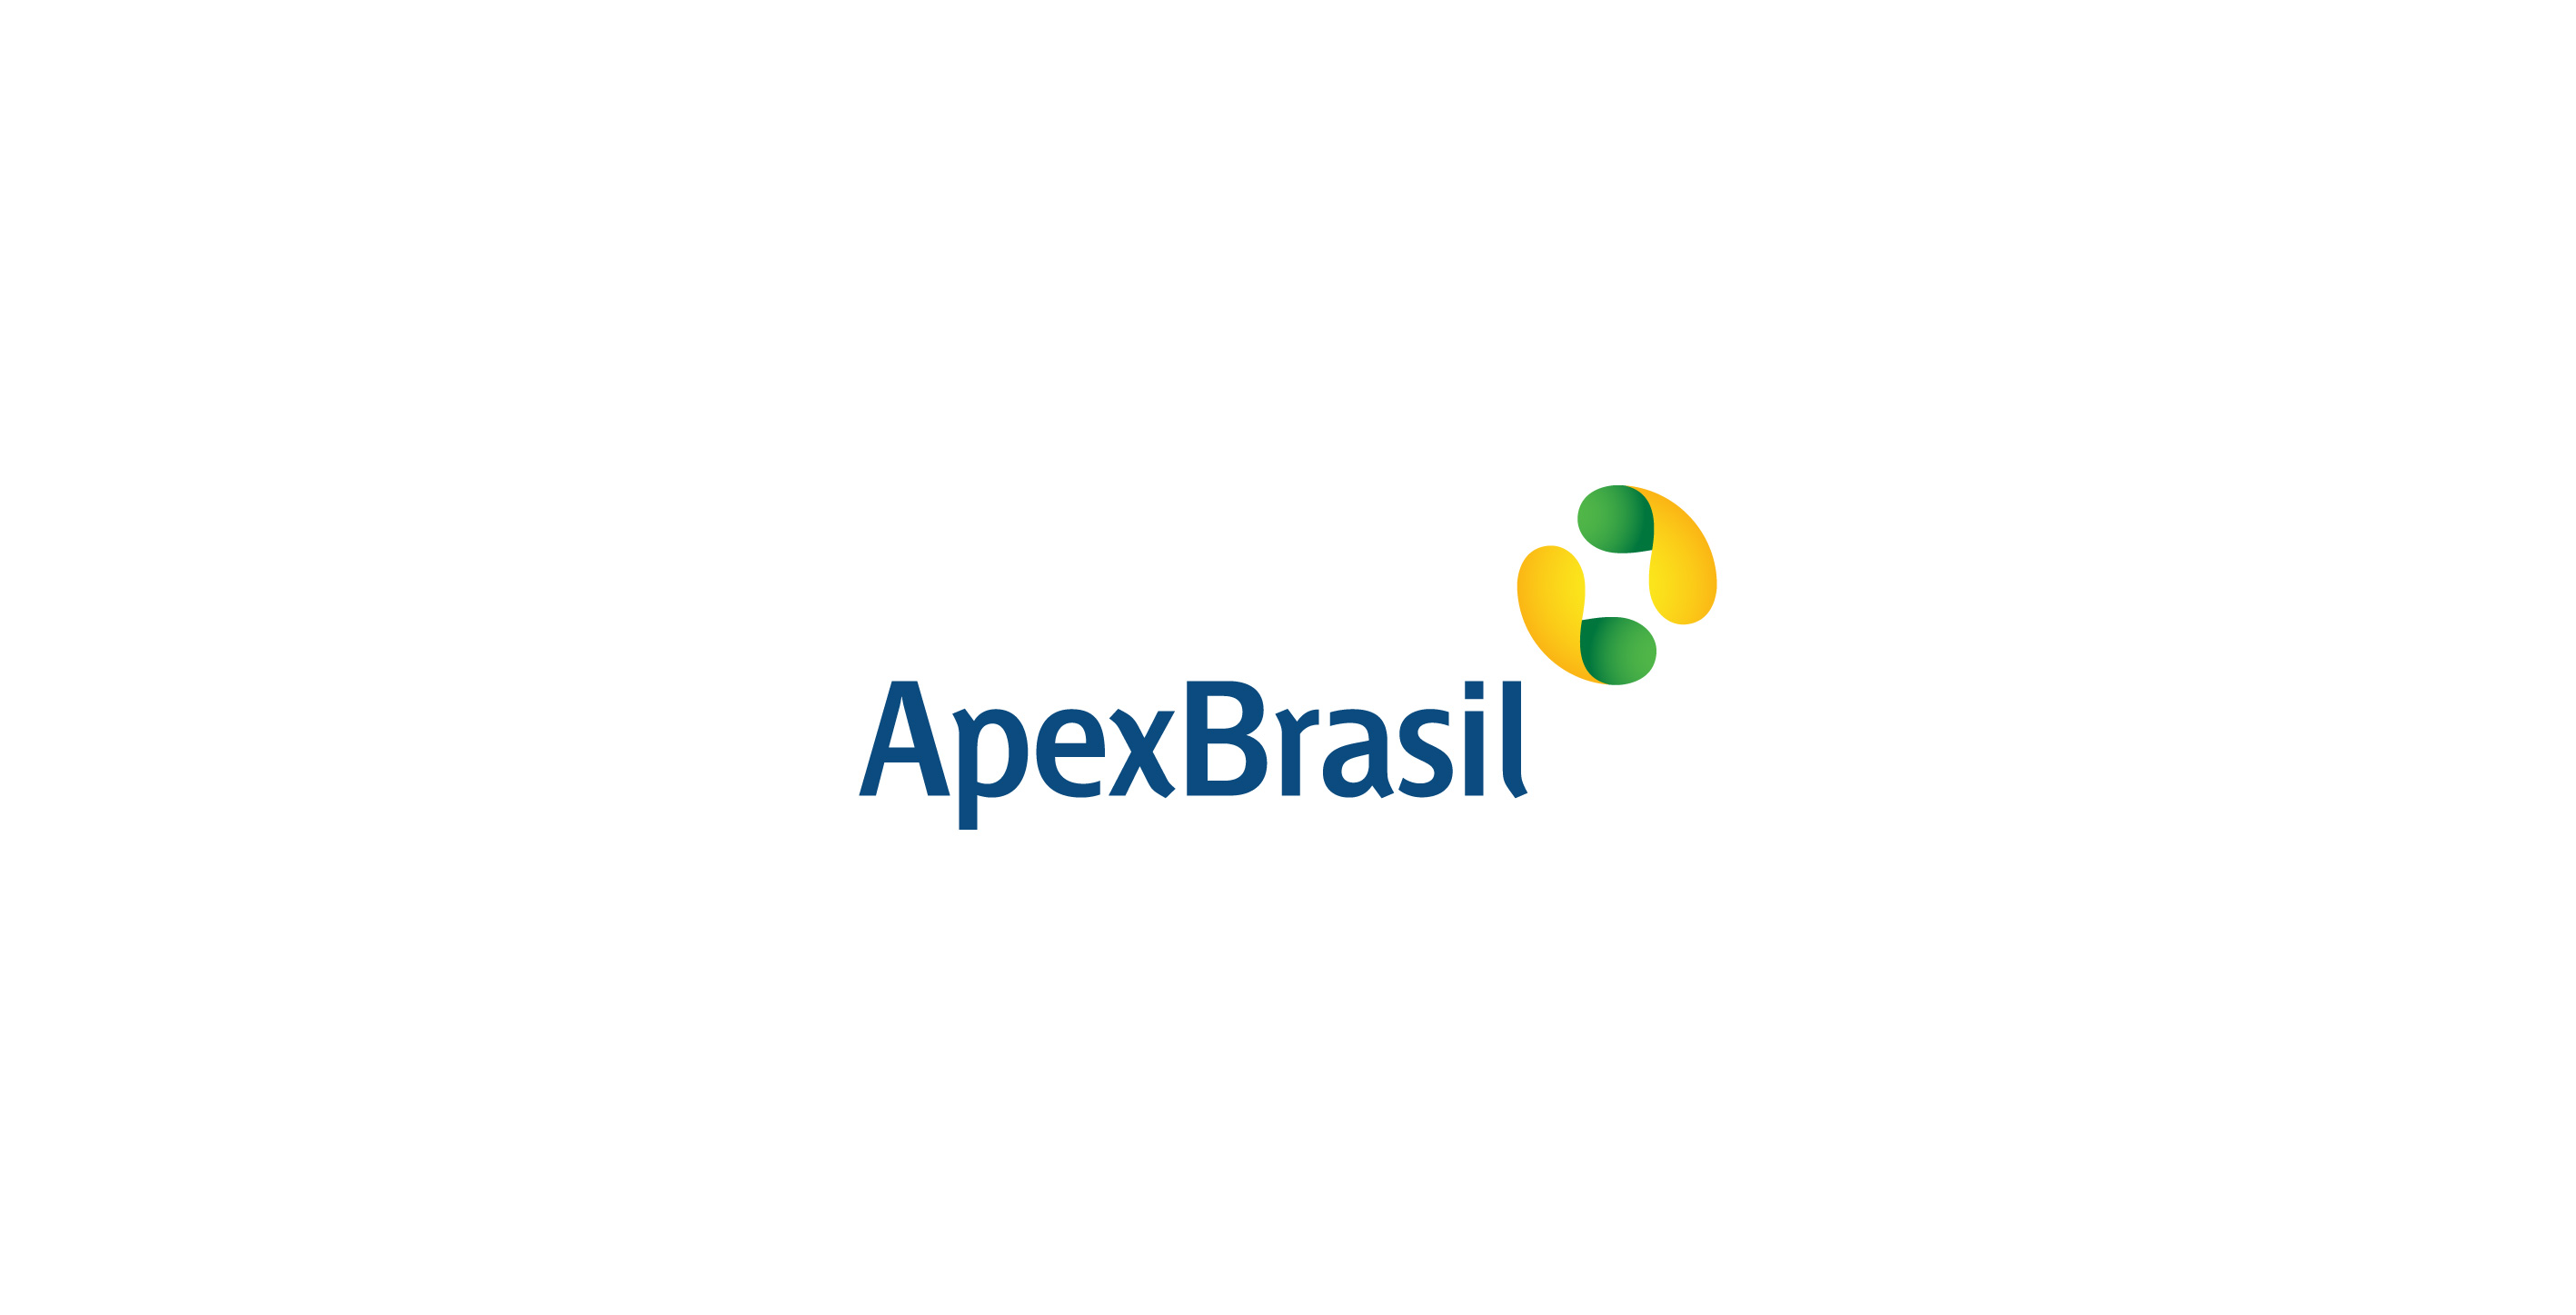 Apex-Brasil: Brand Identity